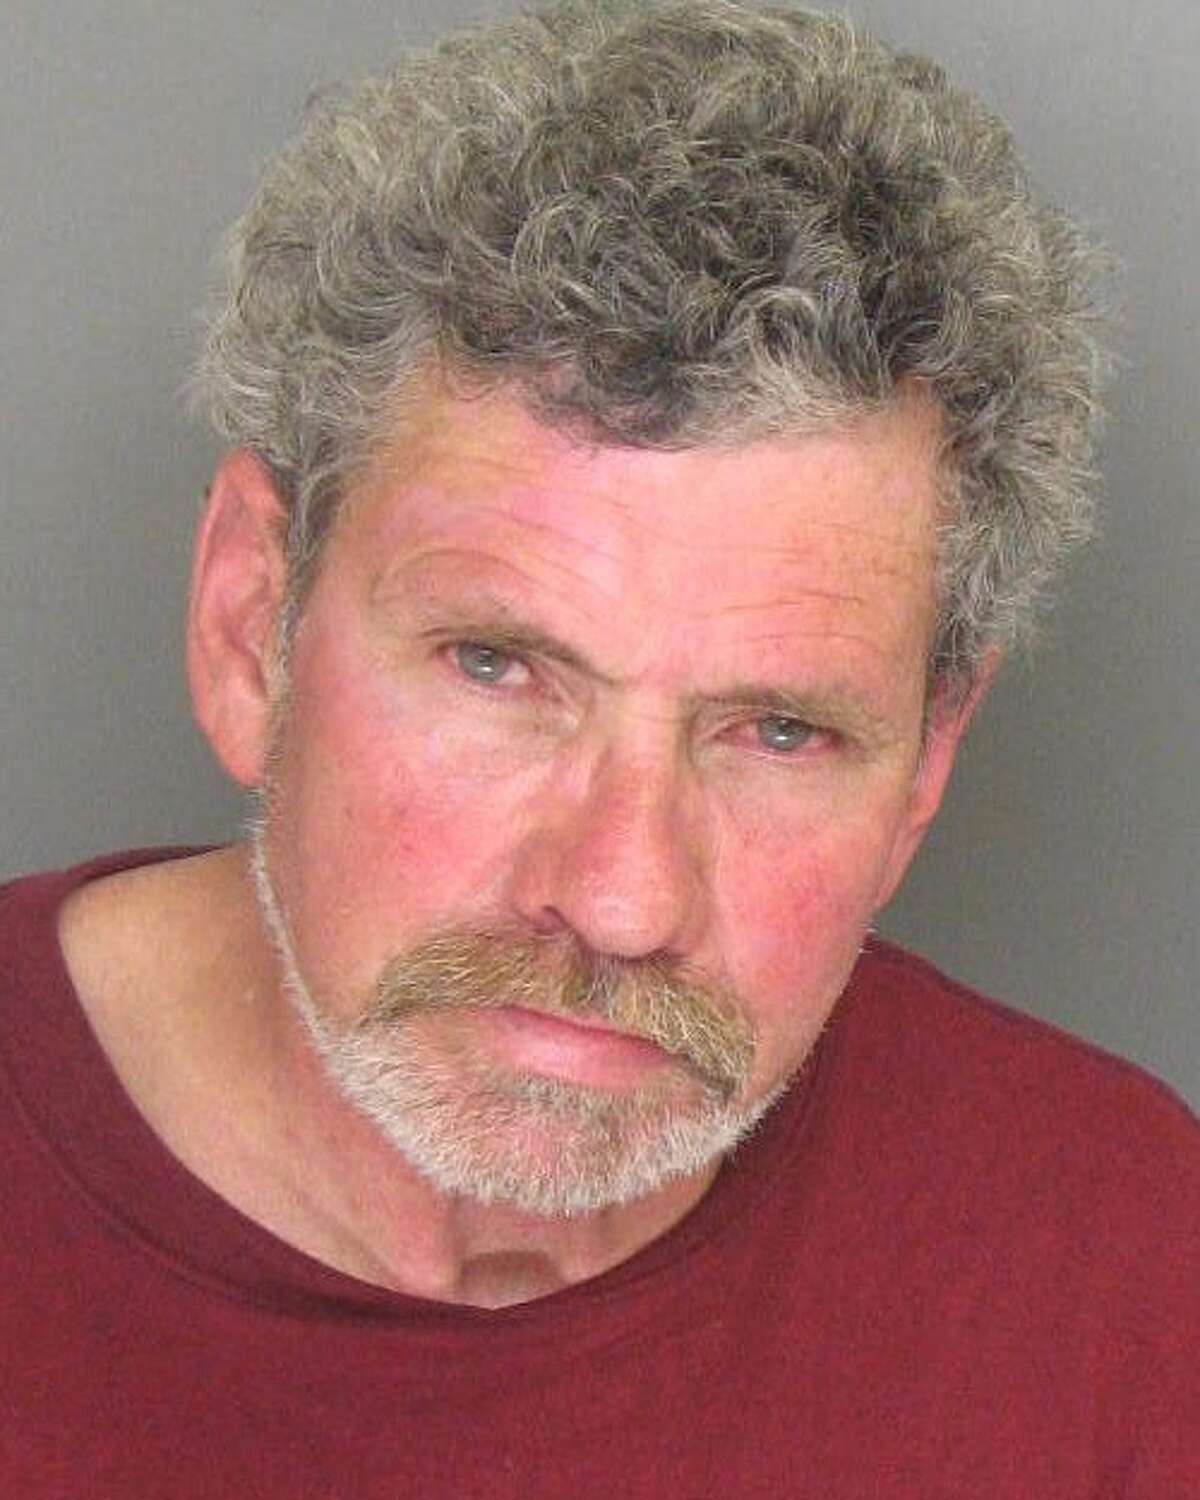 The suspect is Bradley Kellman, 60, of Santa Cruz.